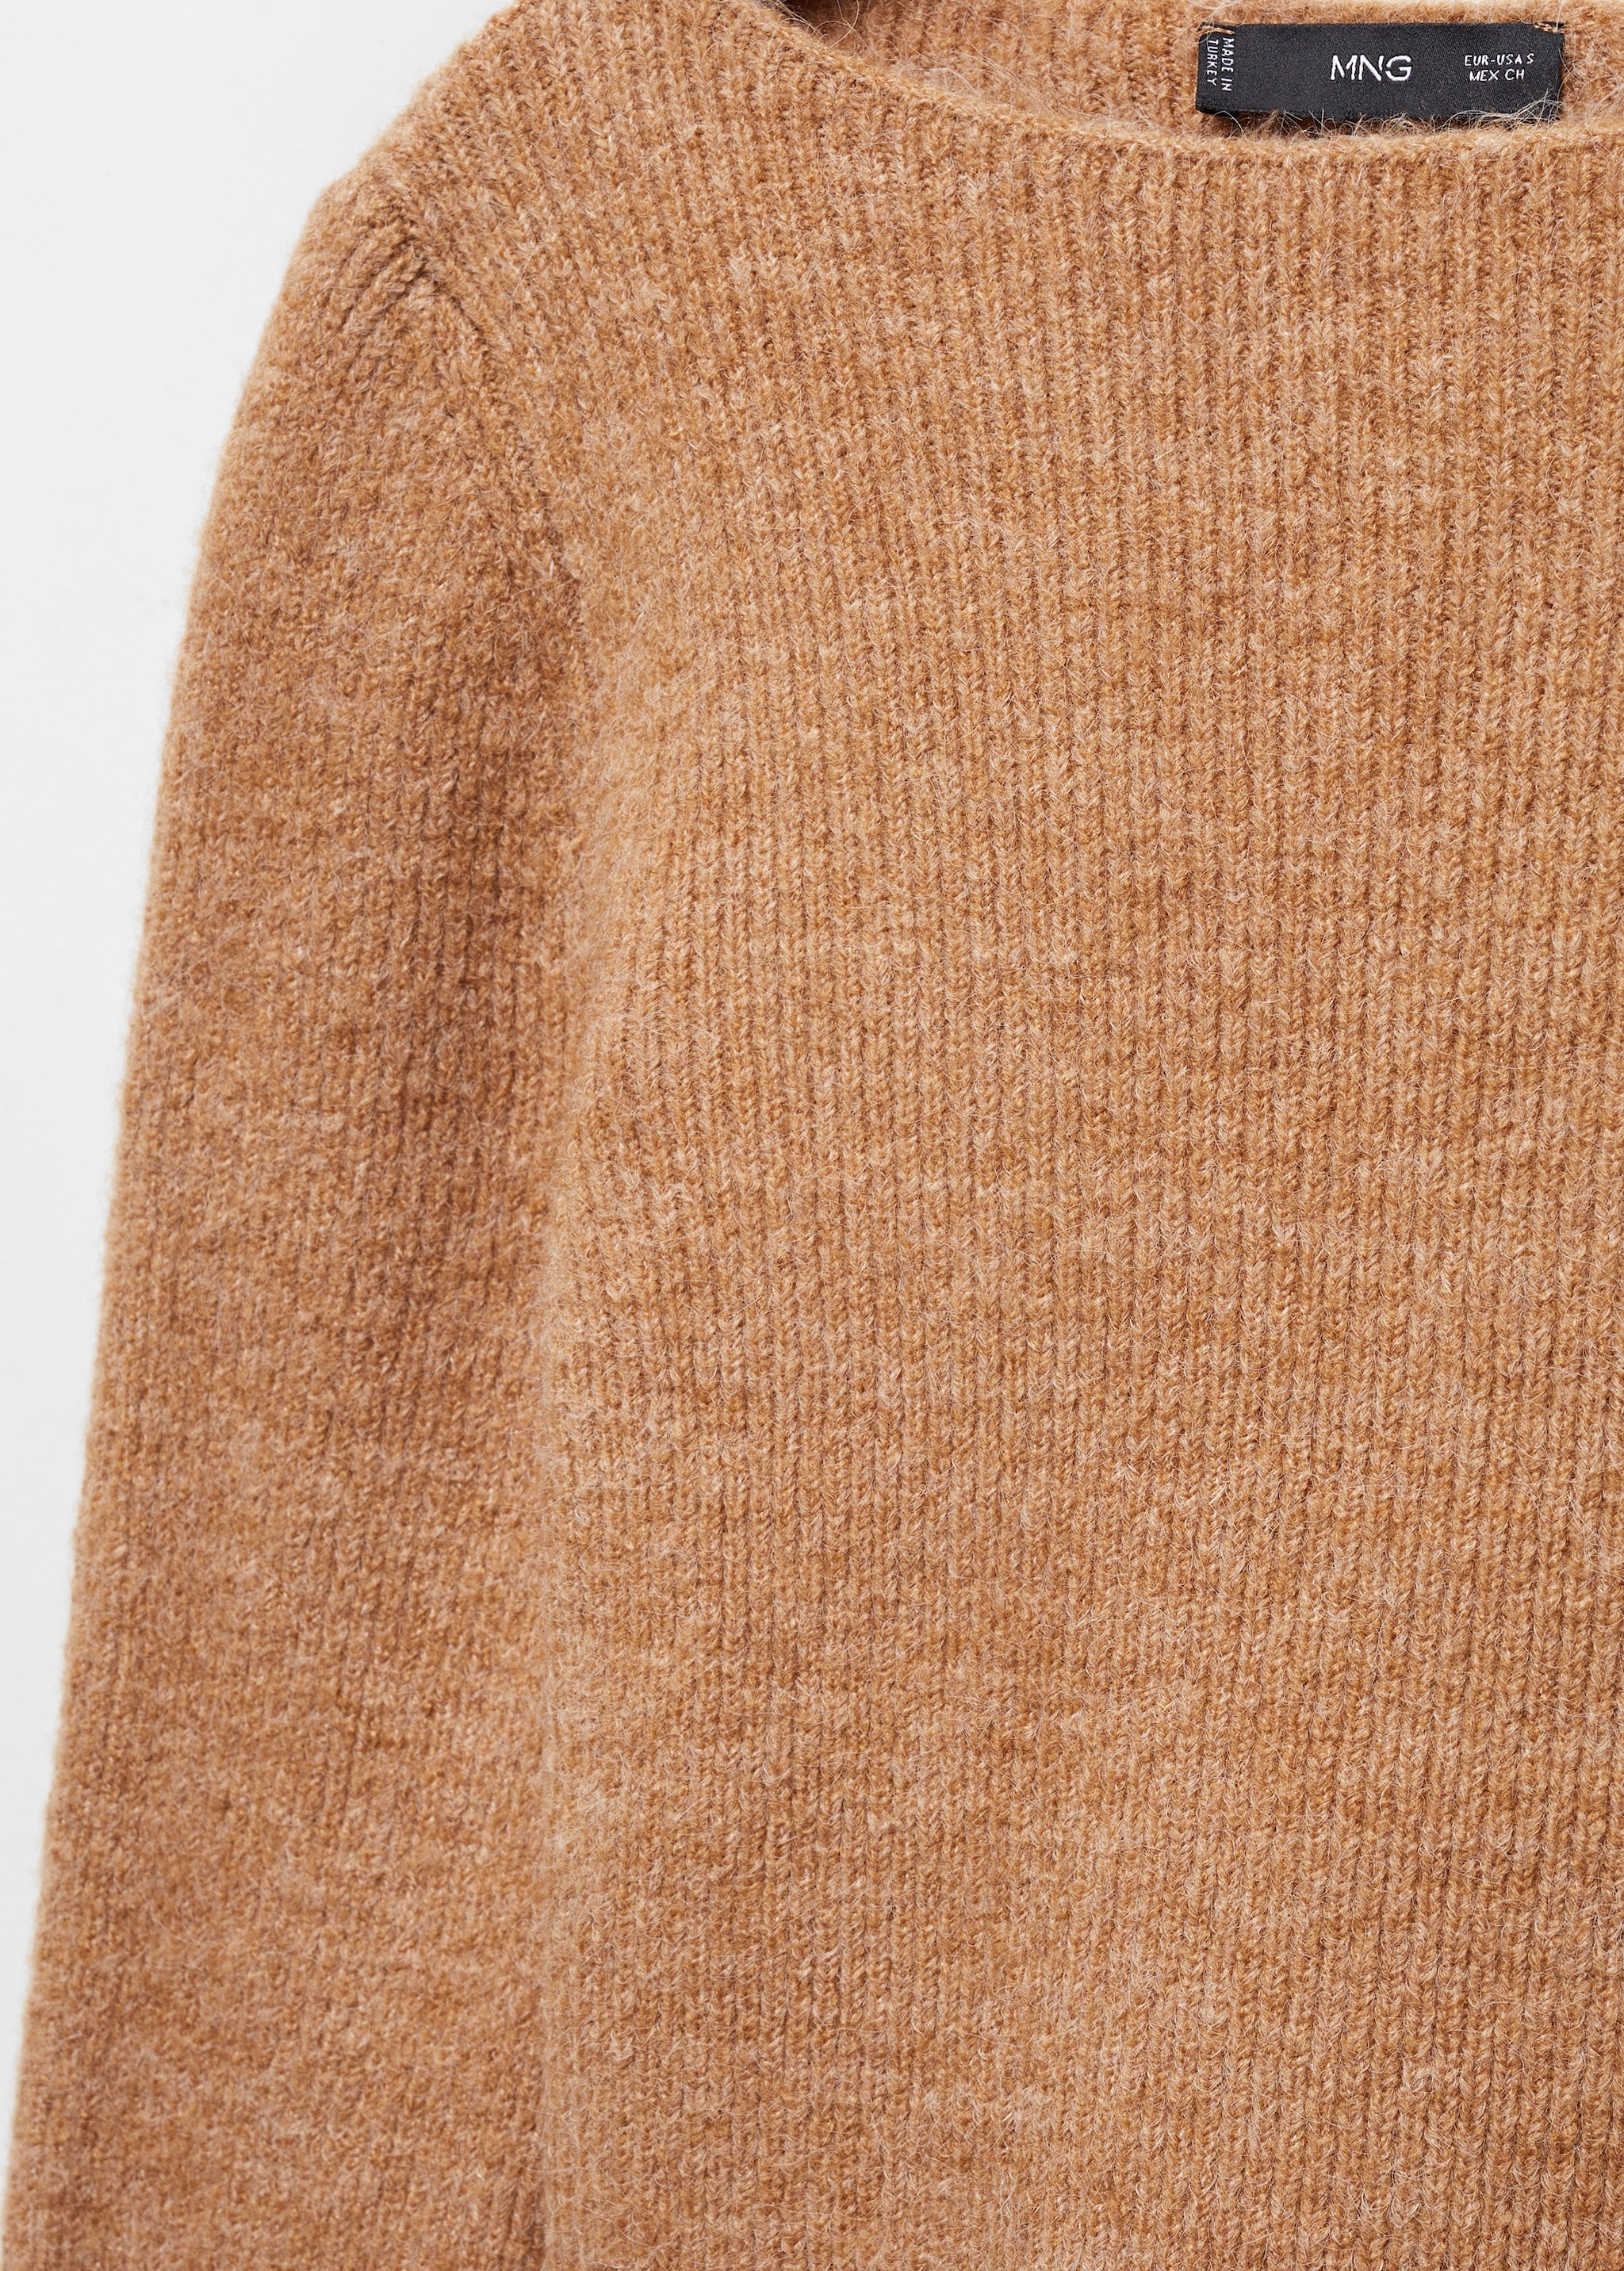 Boat-neck knitted sweater - Detaliu al articolului 8